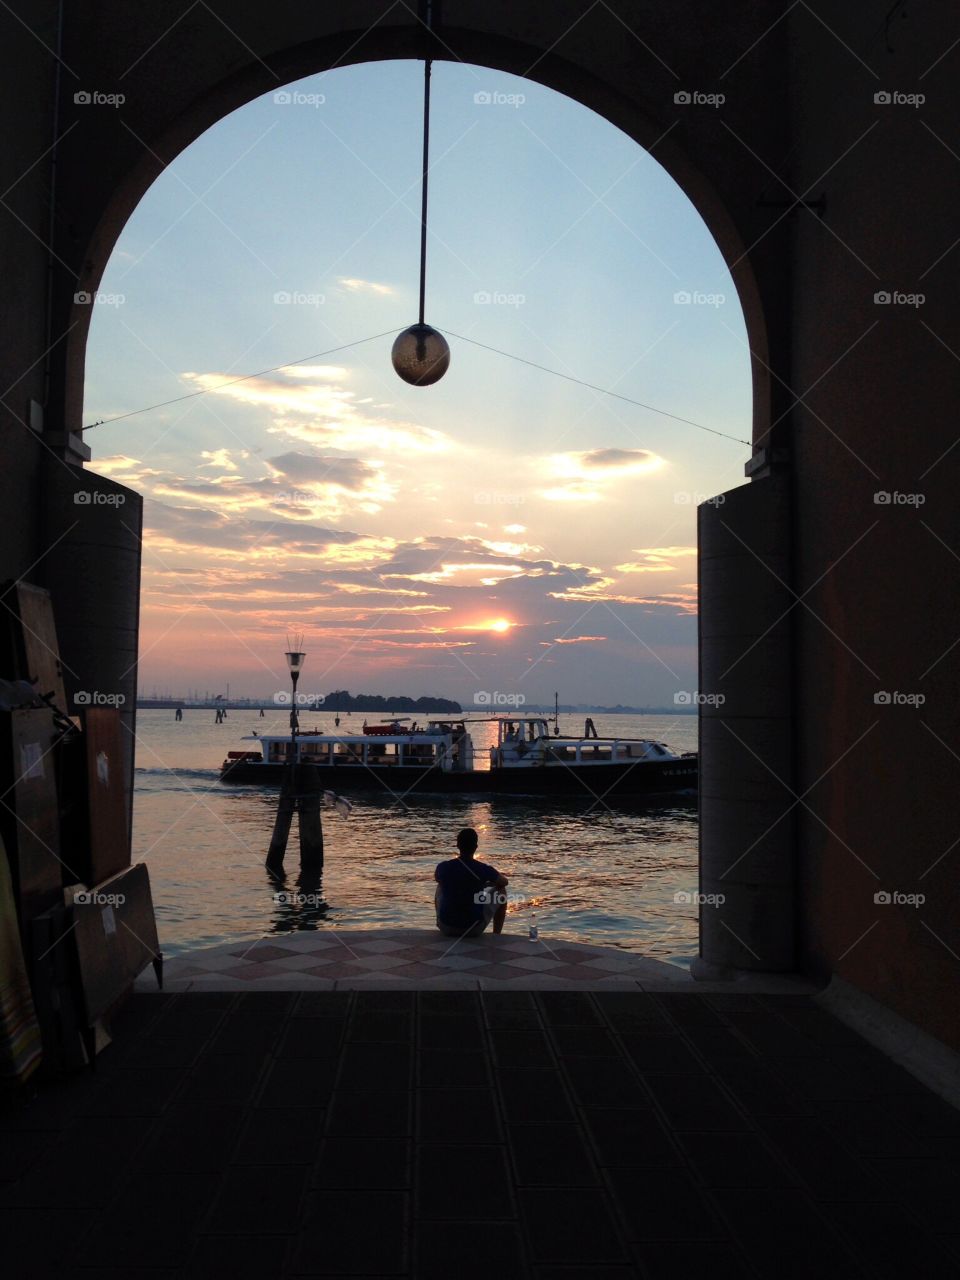 Sunset in Venice 